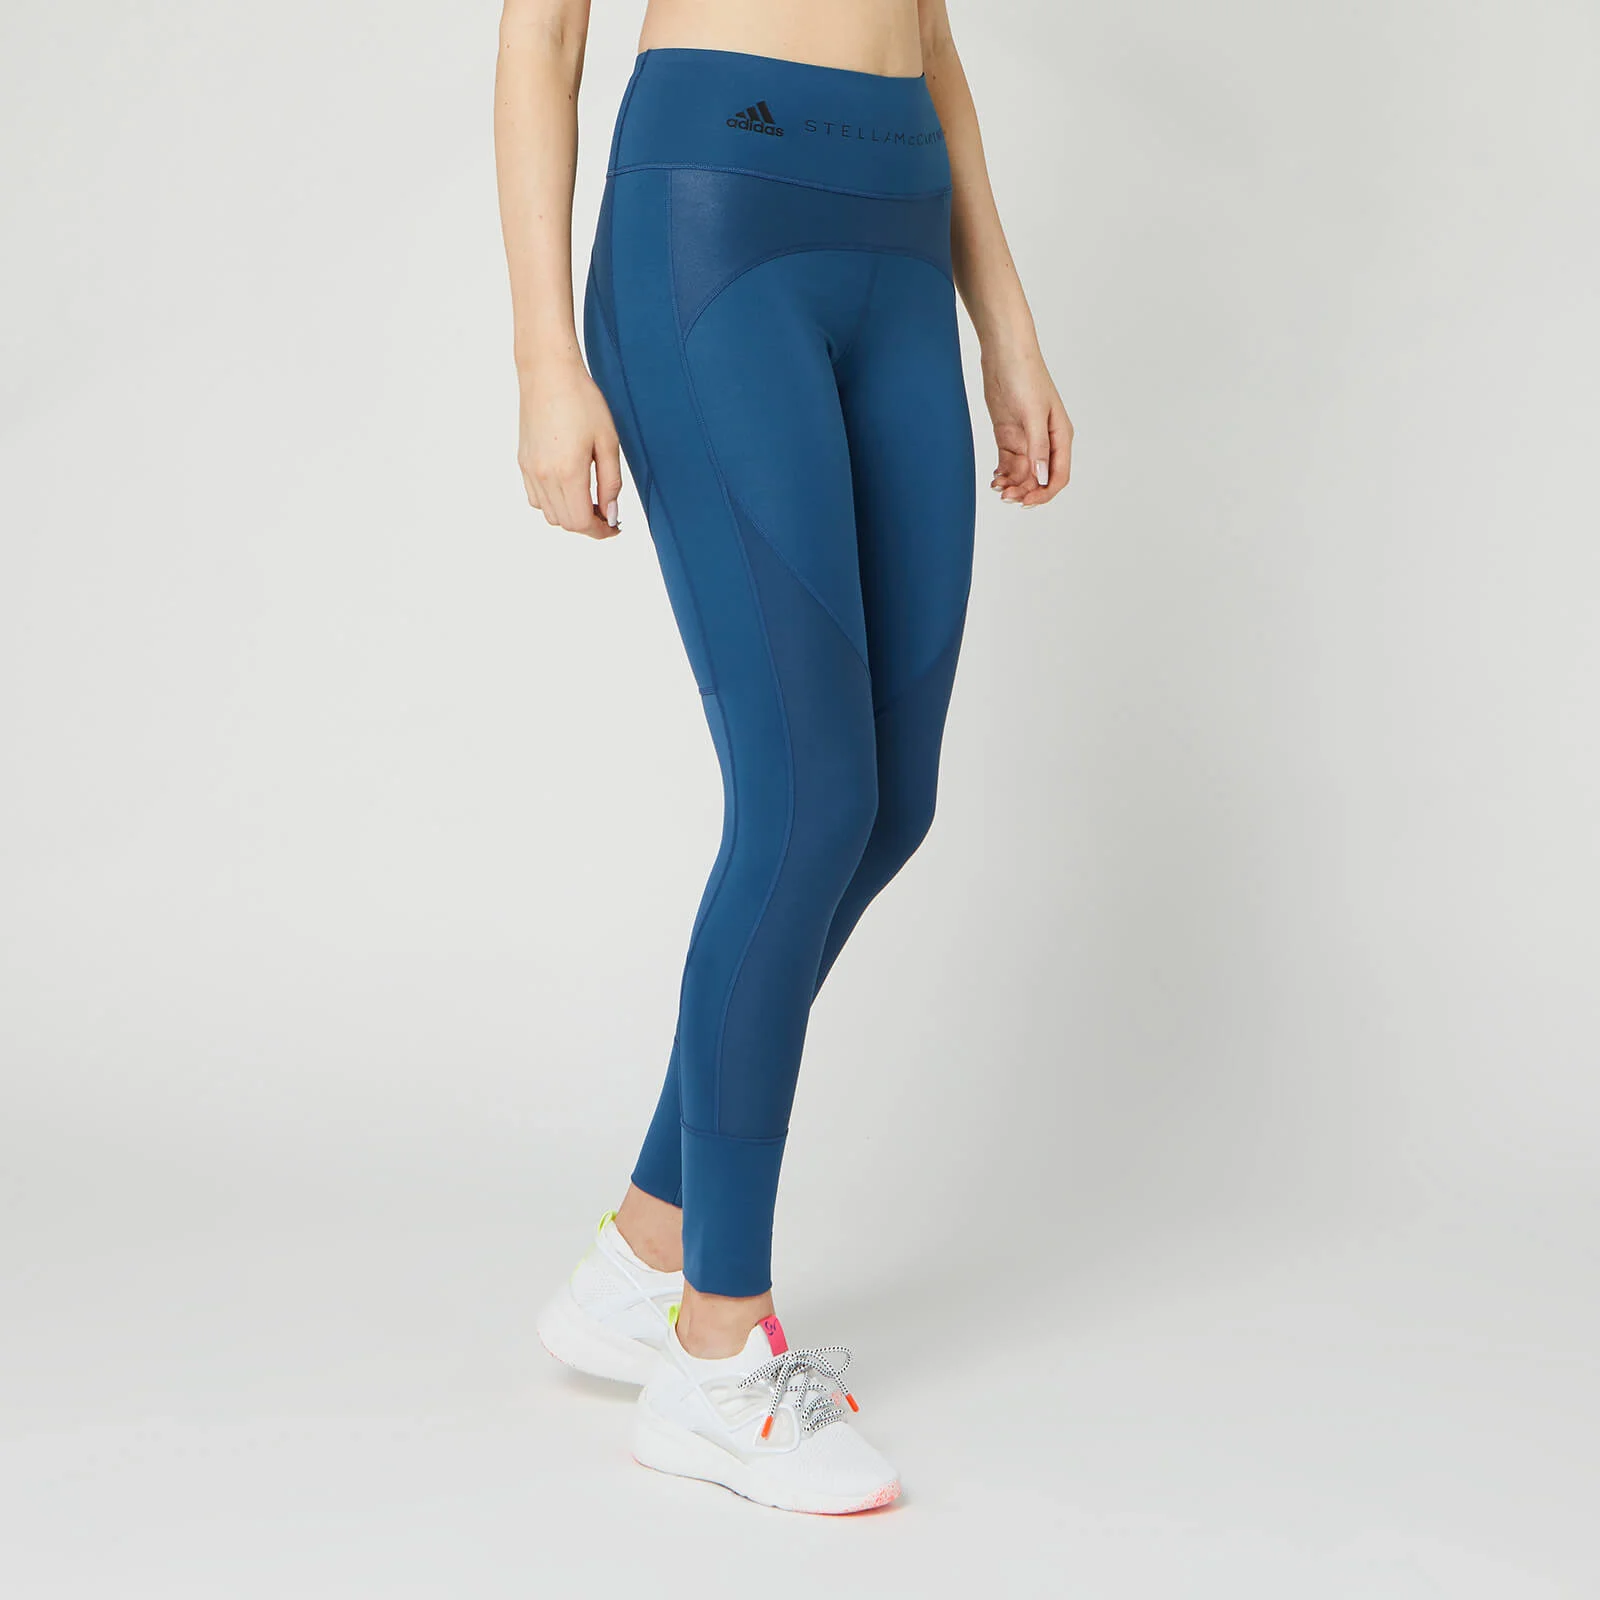 adidas by Stella McCartney Women's Training Bt Tights - Vis Blue Image 1